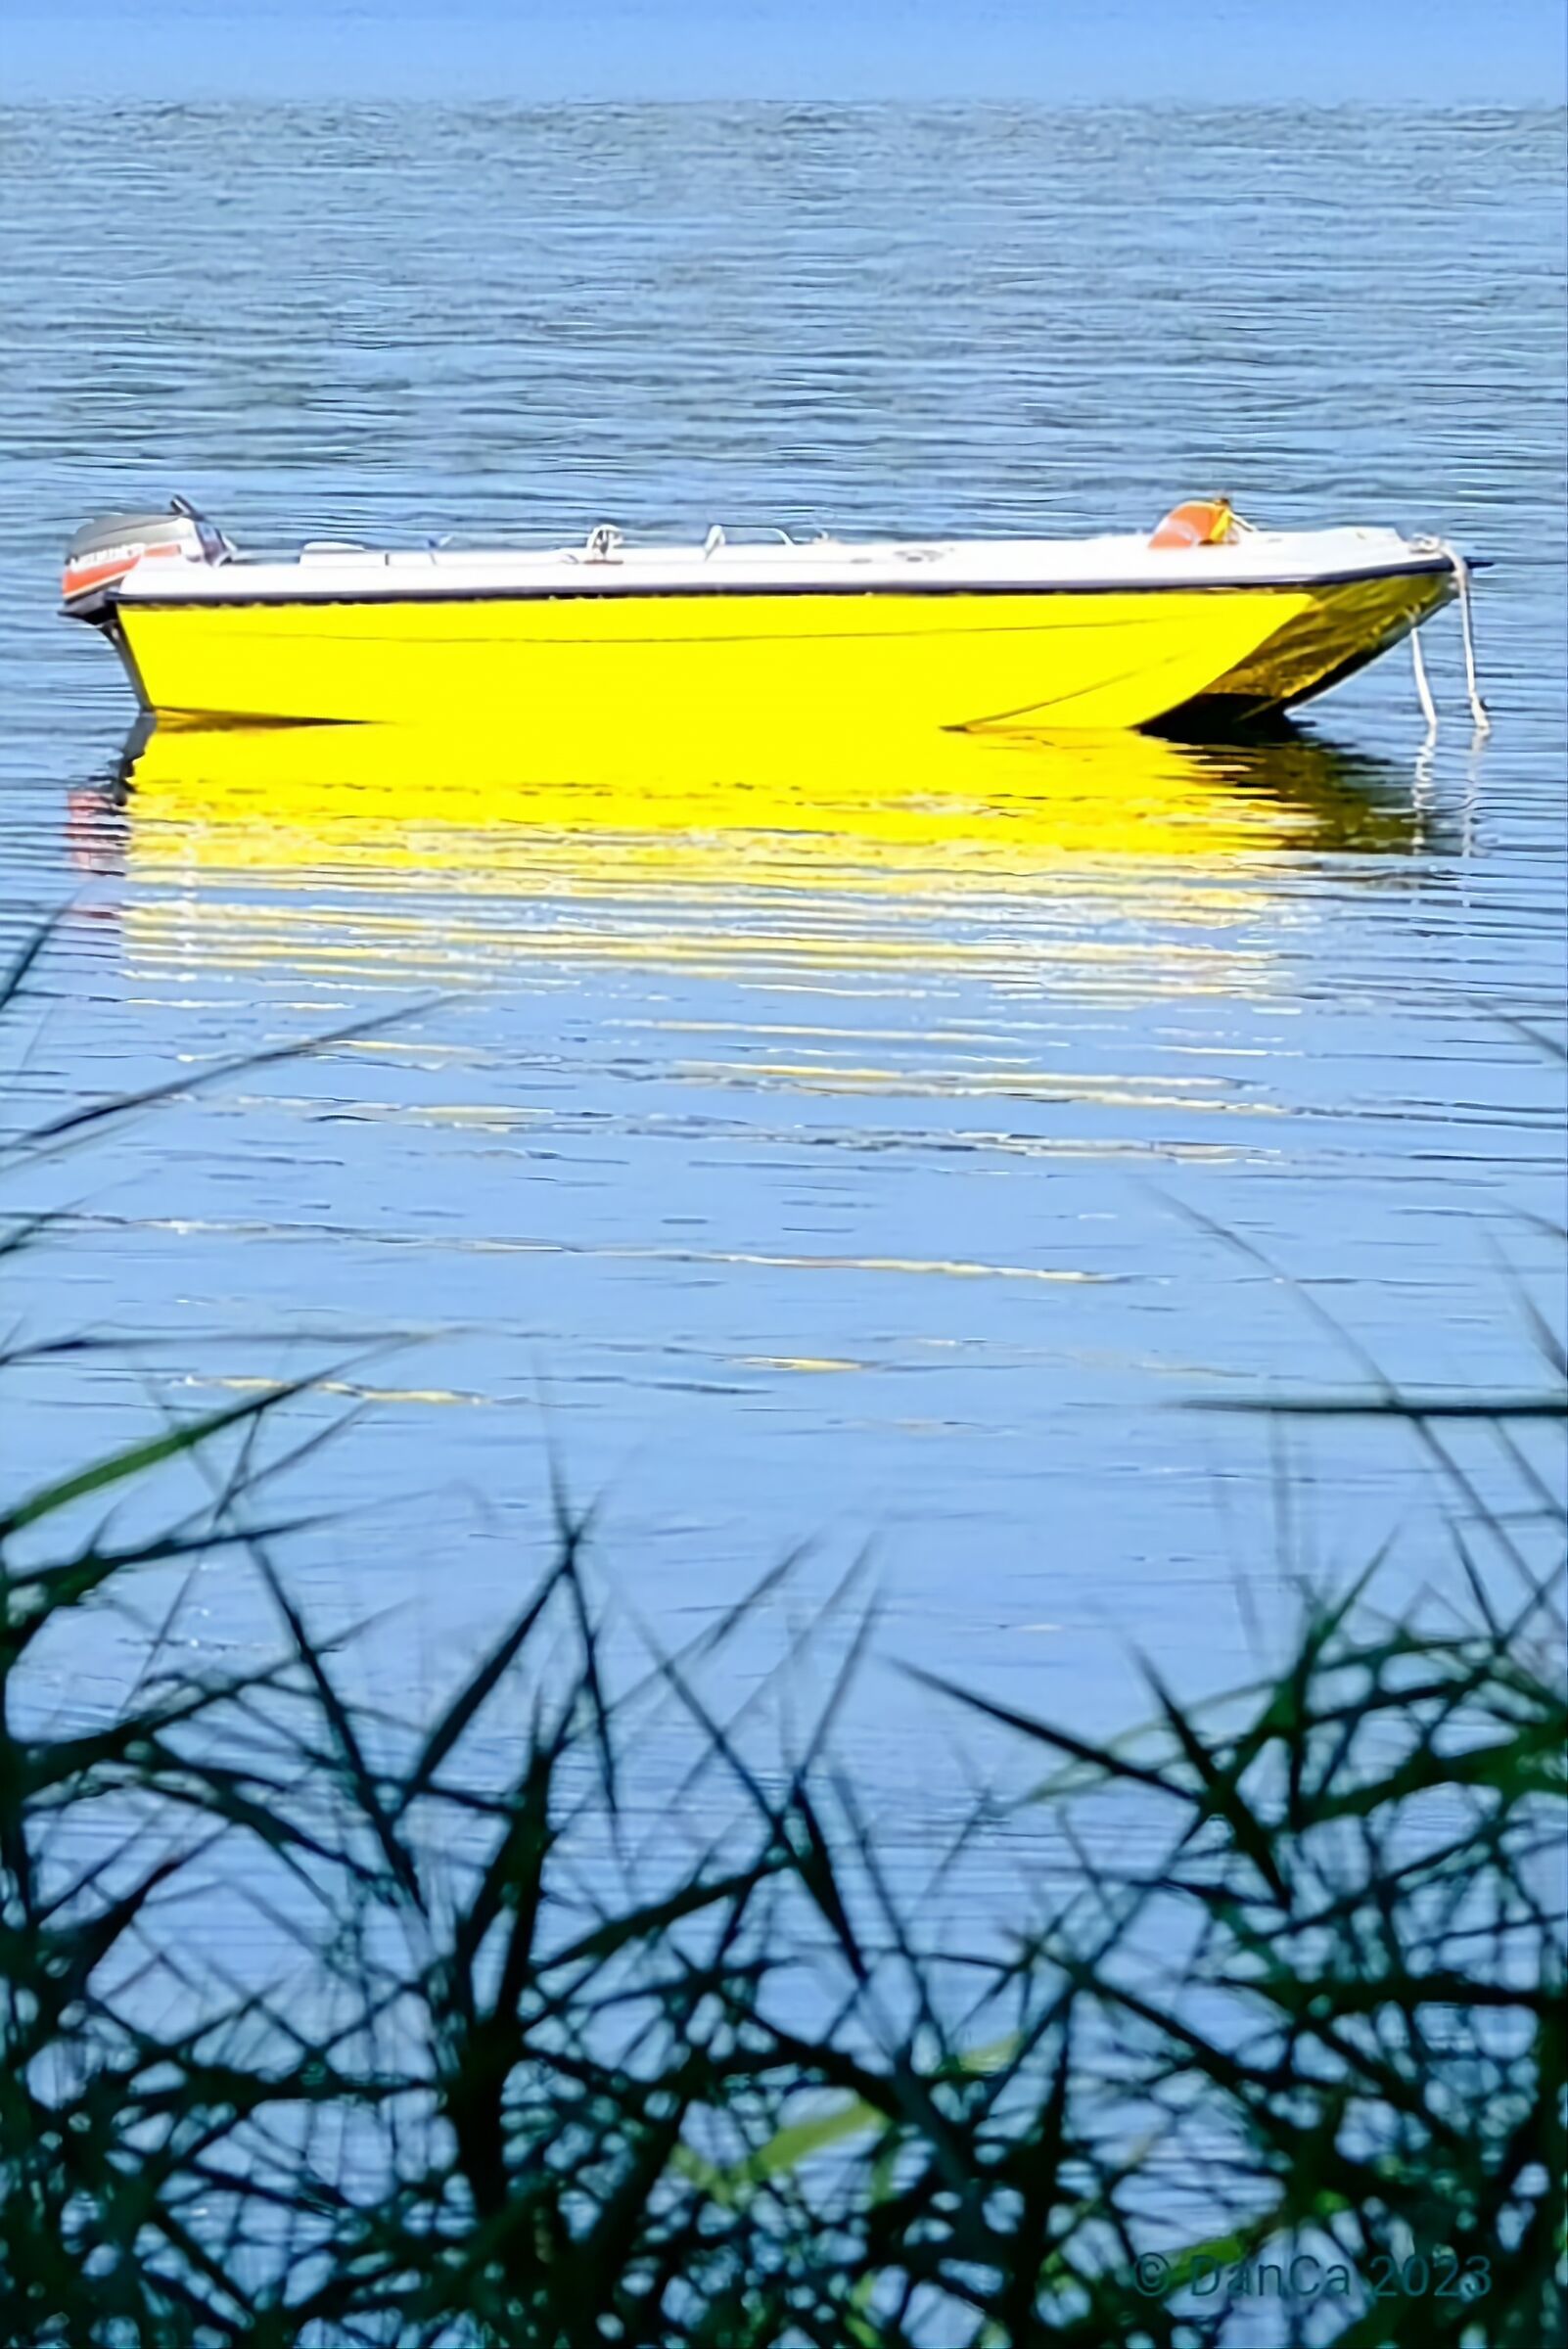 La barca gialla...